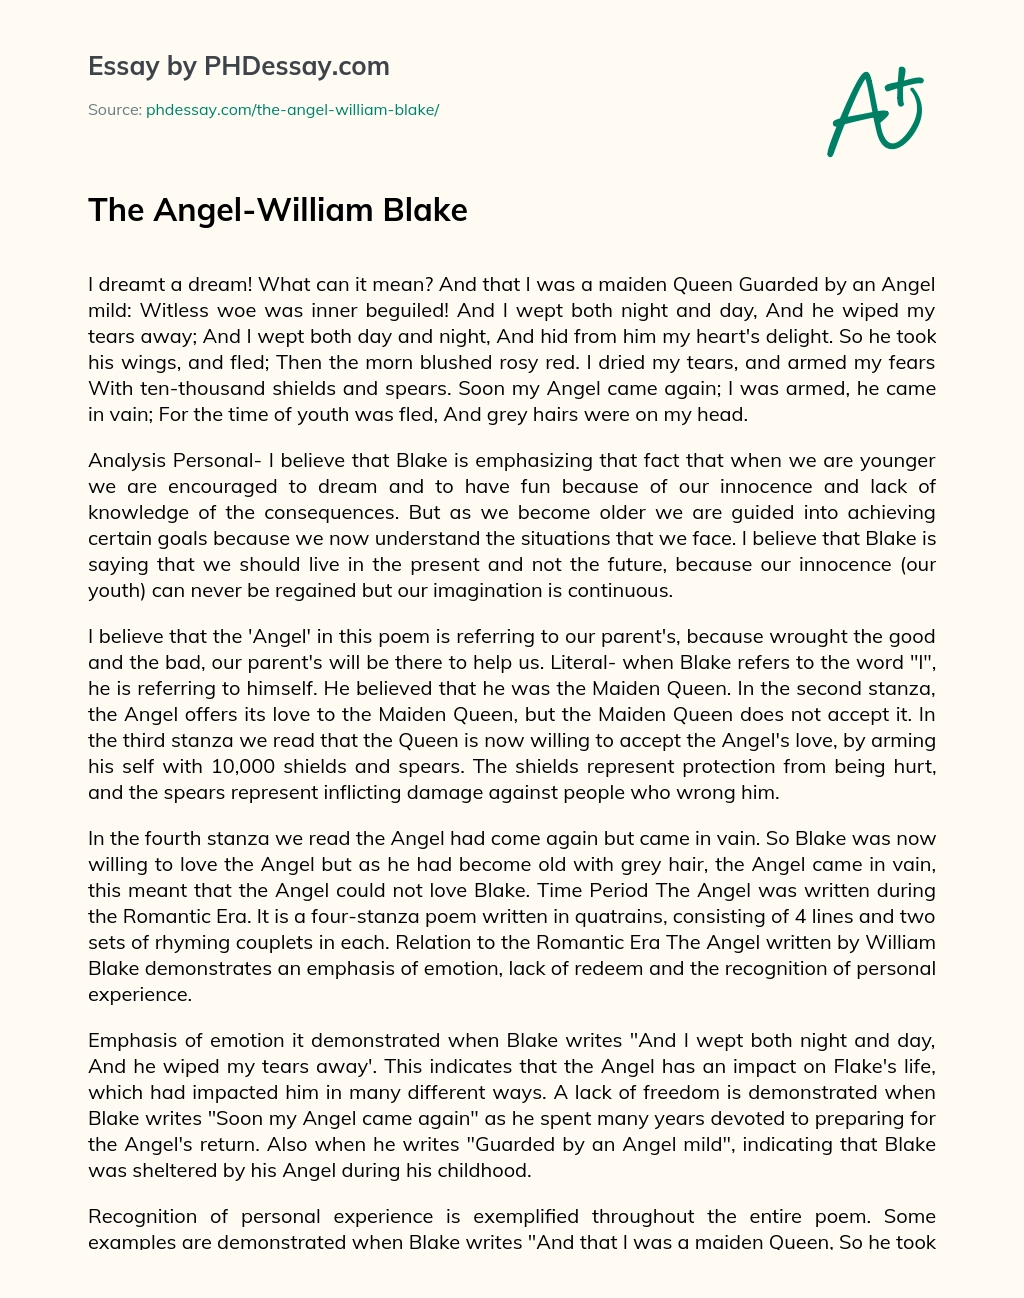 The Angel-William Blake essay